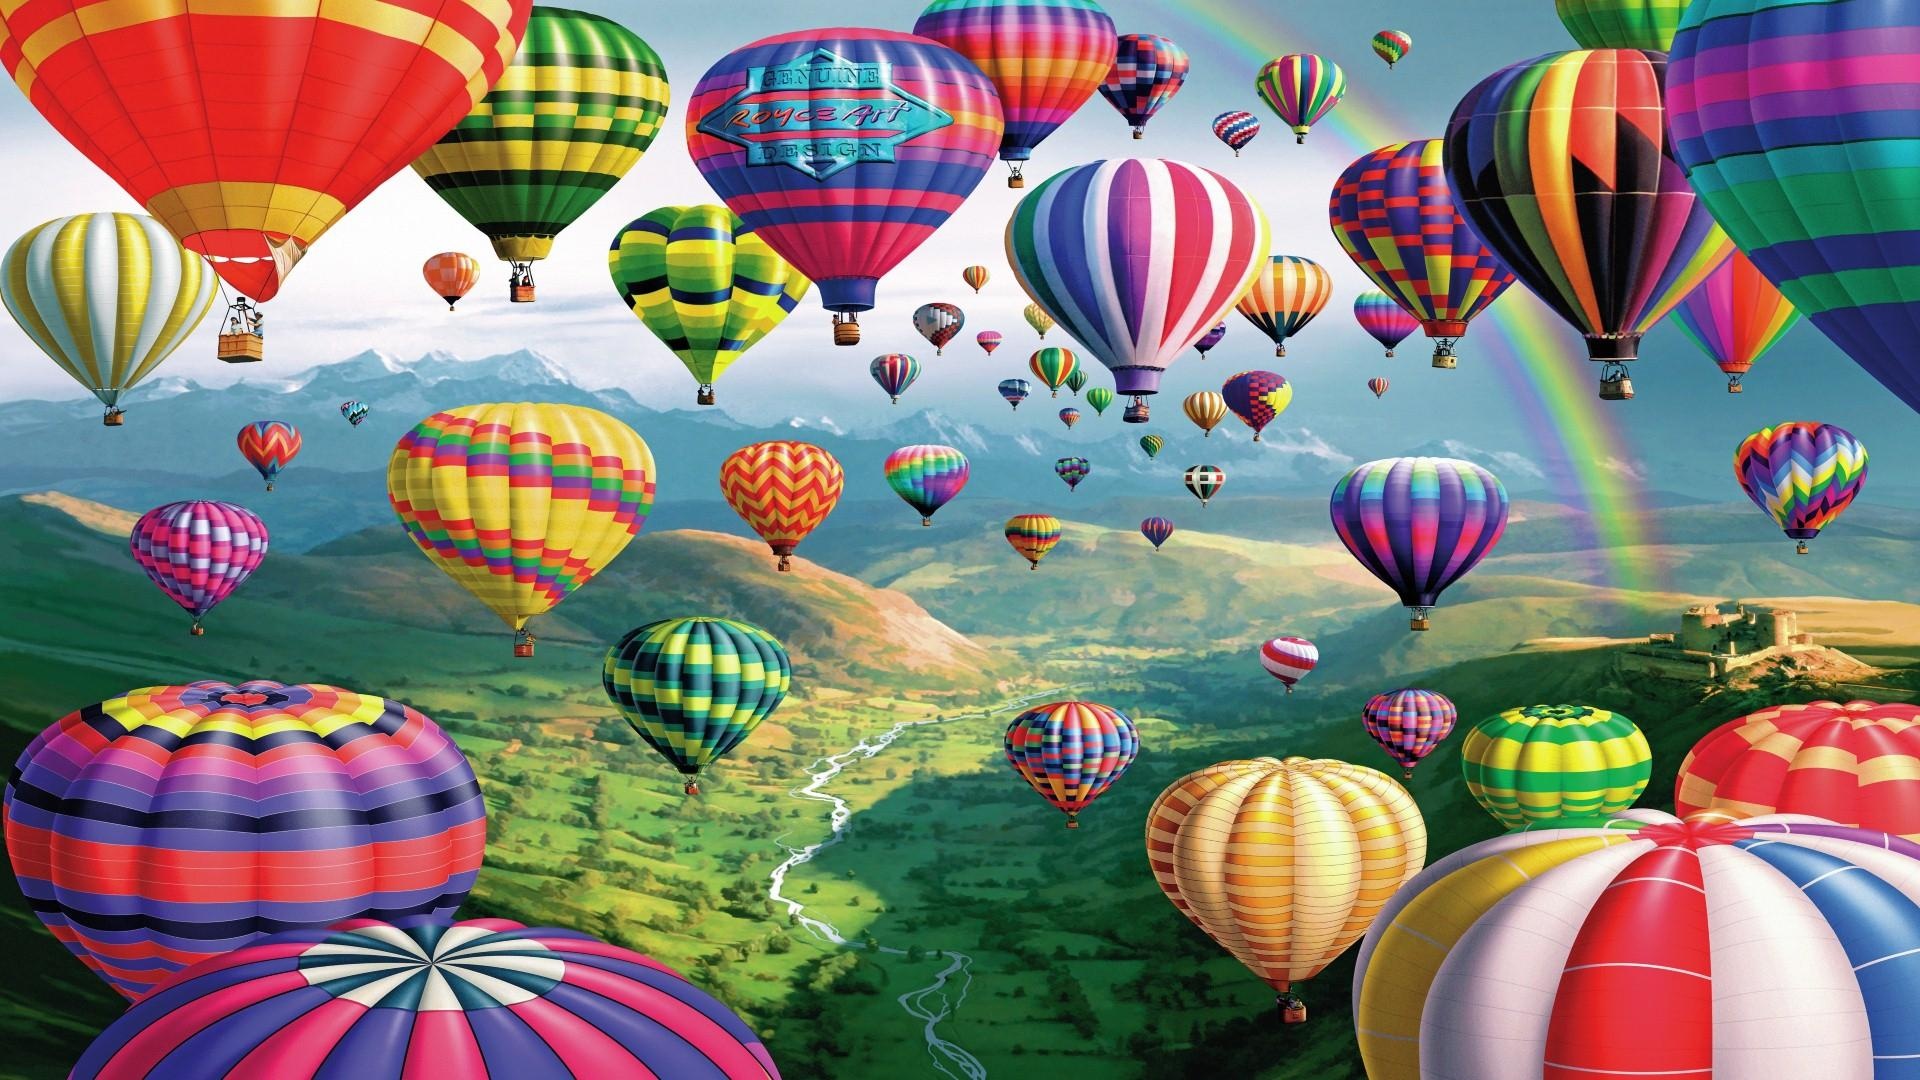 Hot Air Balloon: Aerostat, Royce Art, Art Design, Hot Air Balloon Festival. 1920x1080 Full HD Background.